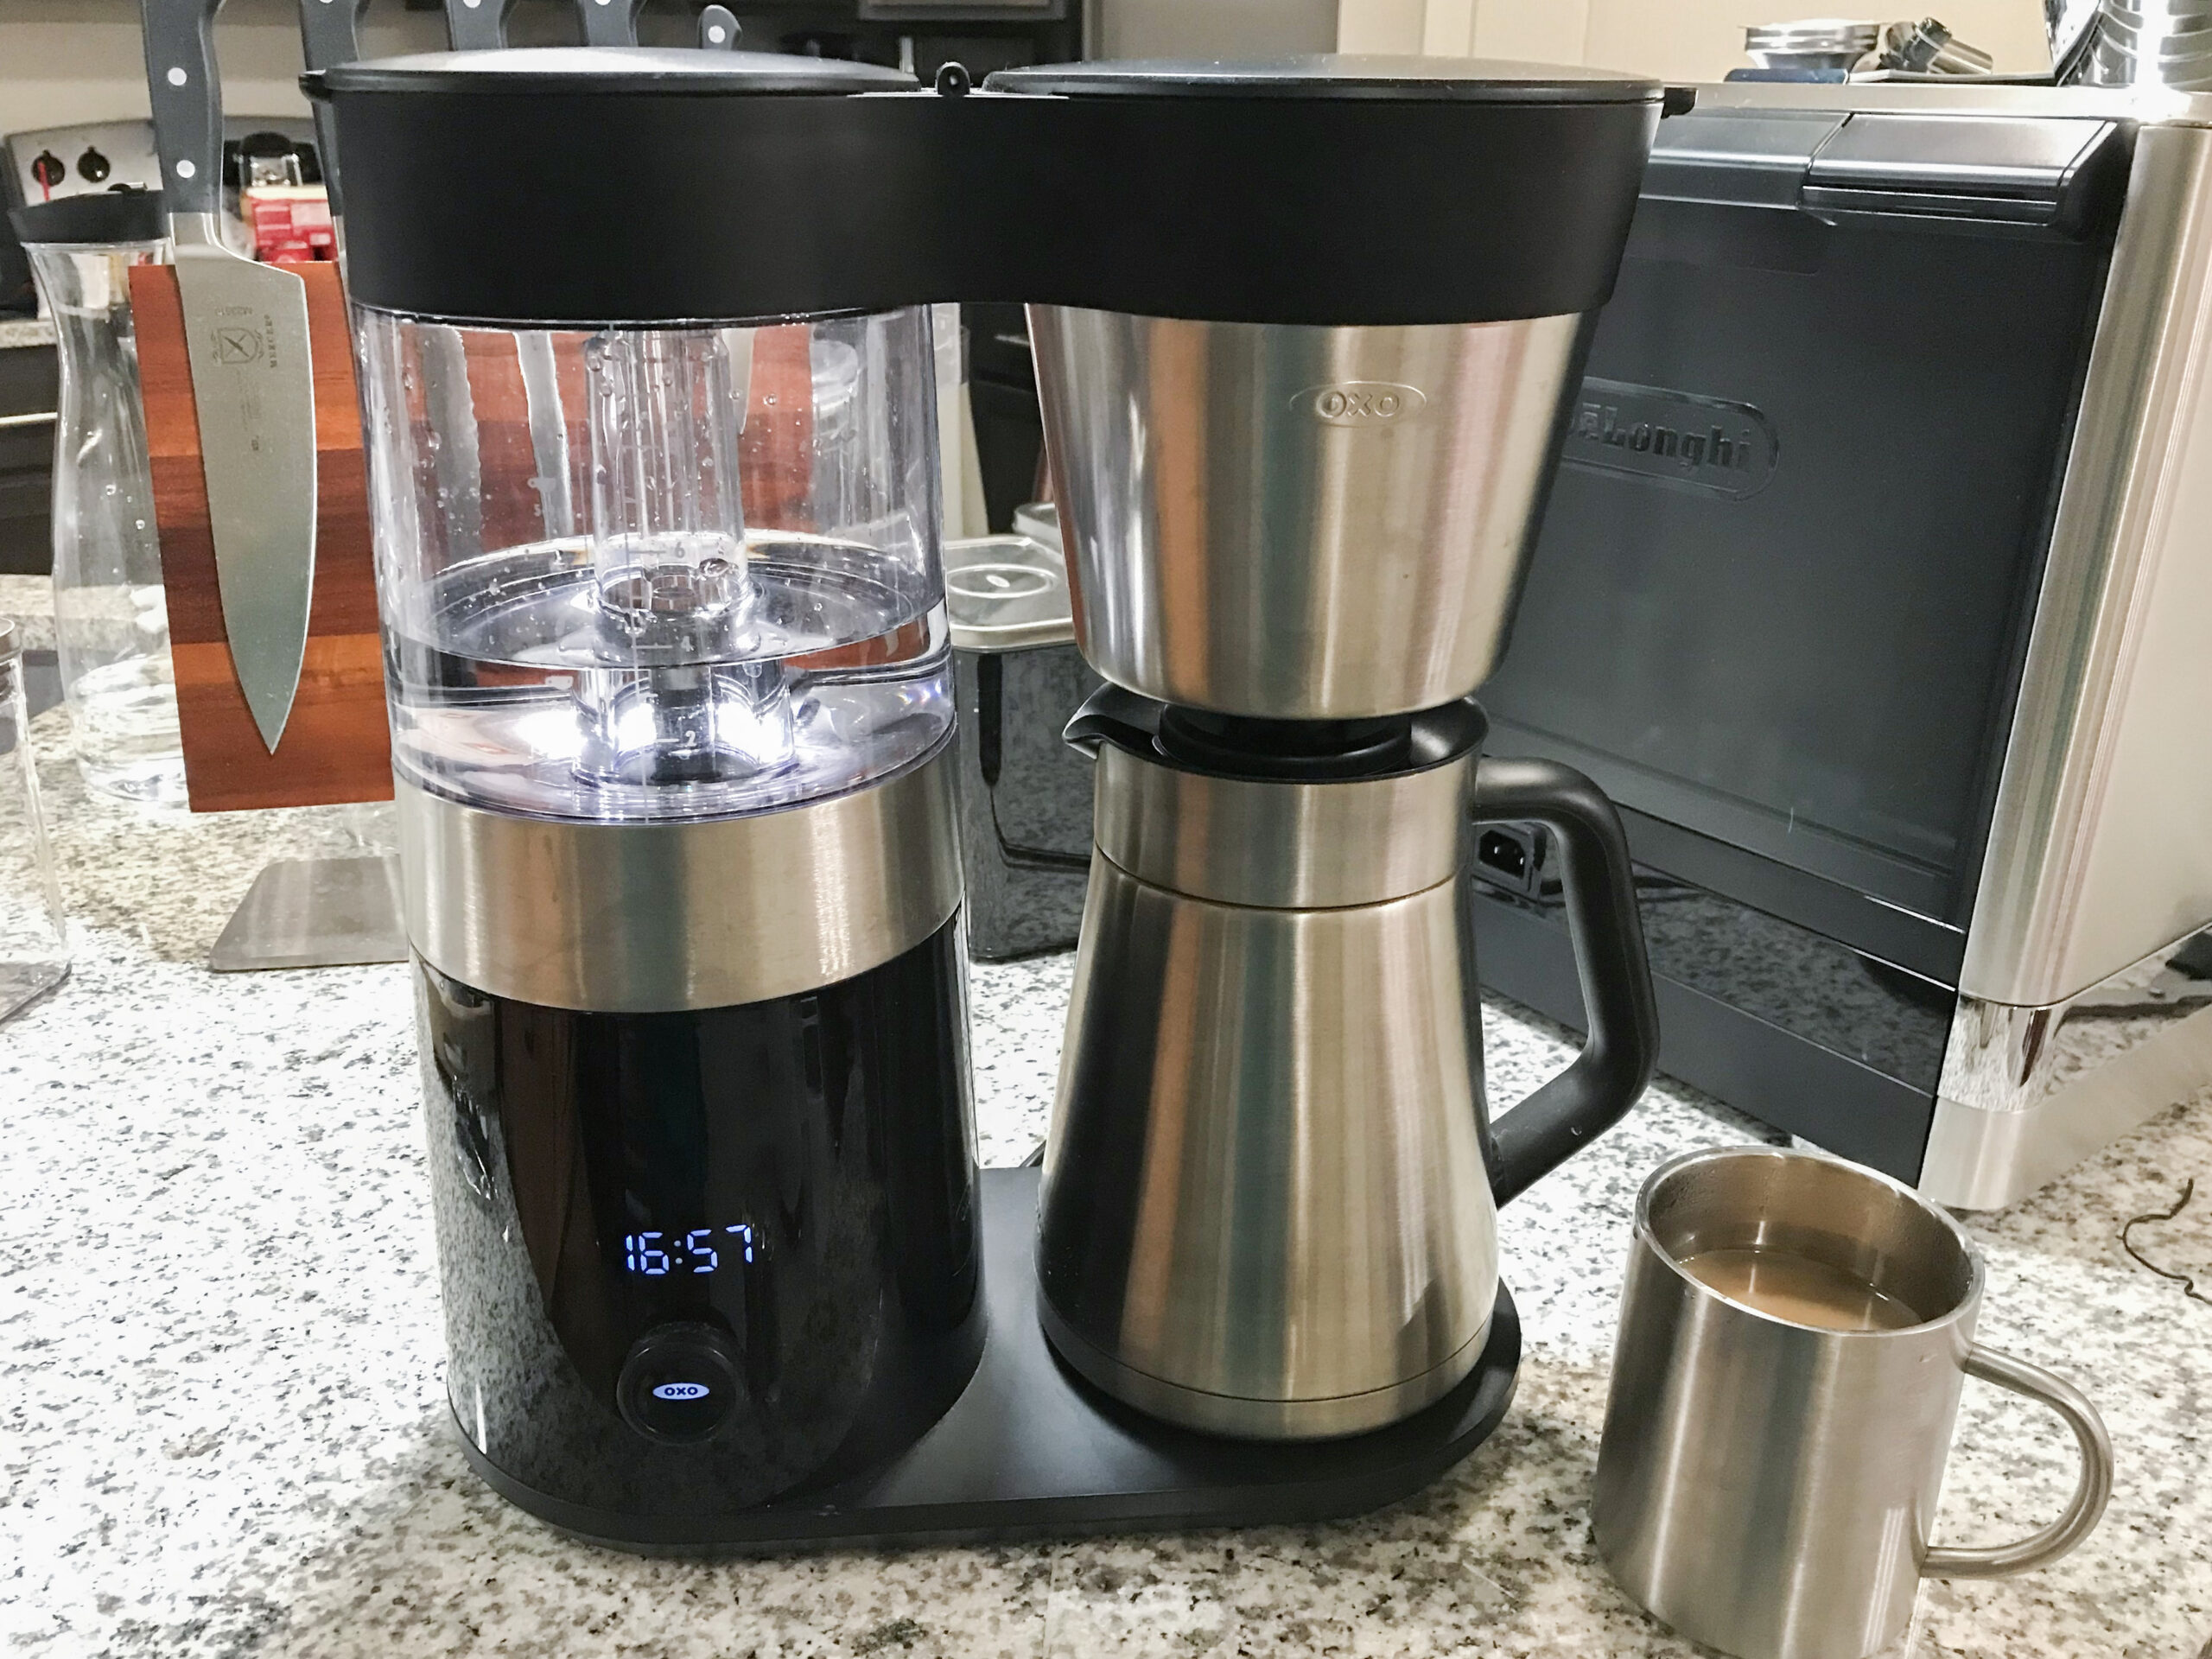 https://www.popsci.com/uploads/2023/08/01/OXO-9-Cup-best-design-drip-coffee-maker-scaled.jpeg?auto=webp&width=800&crop=16:10,offset-x50